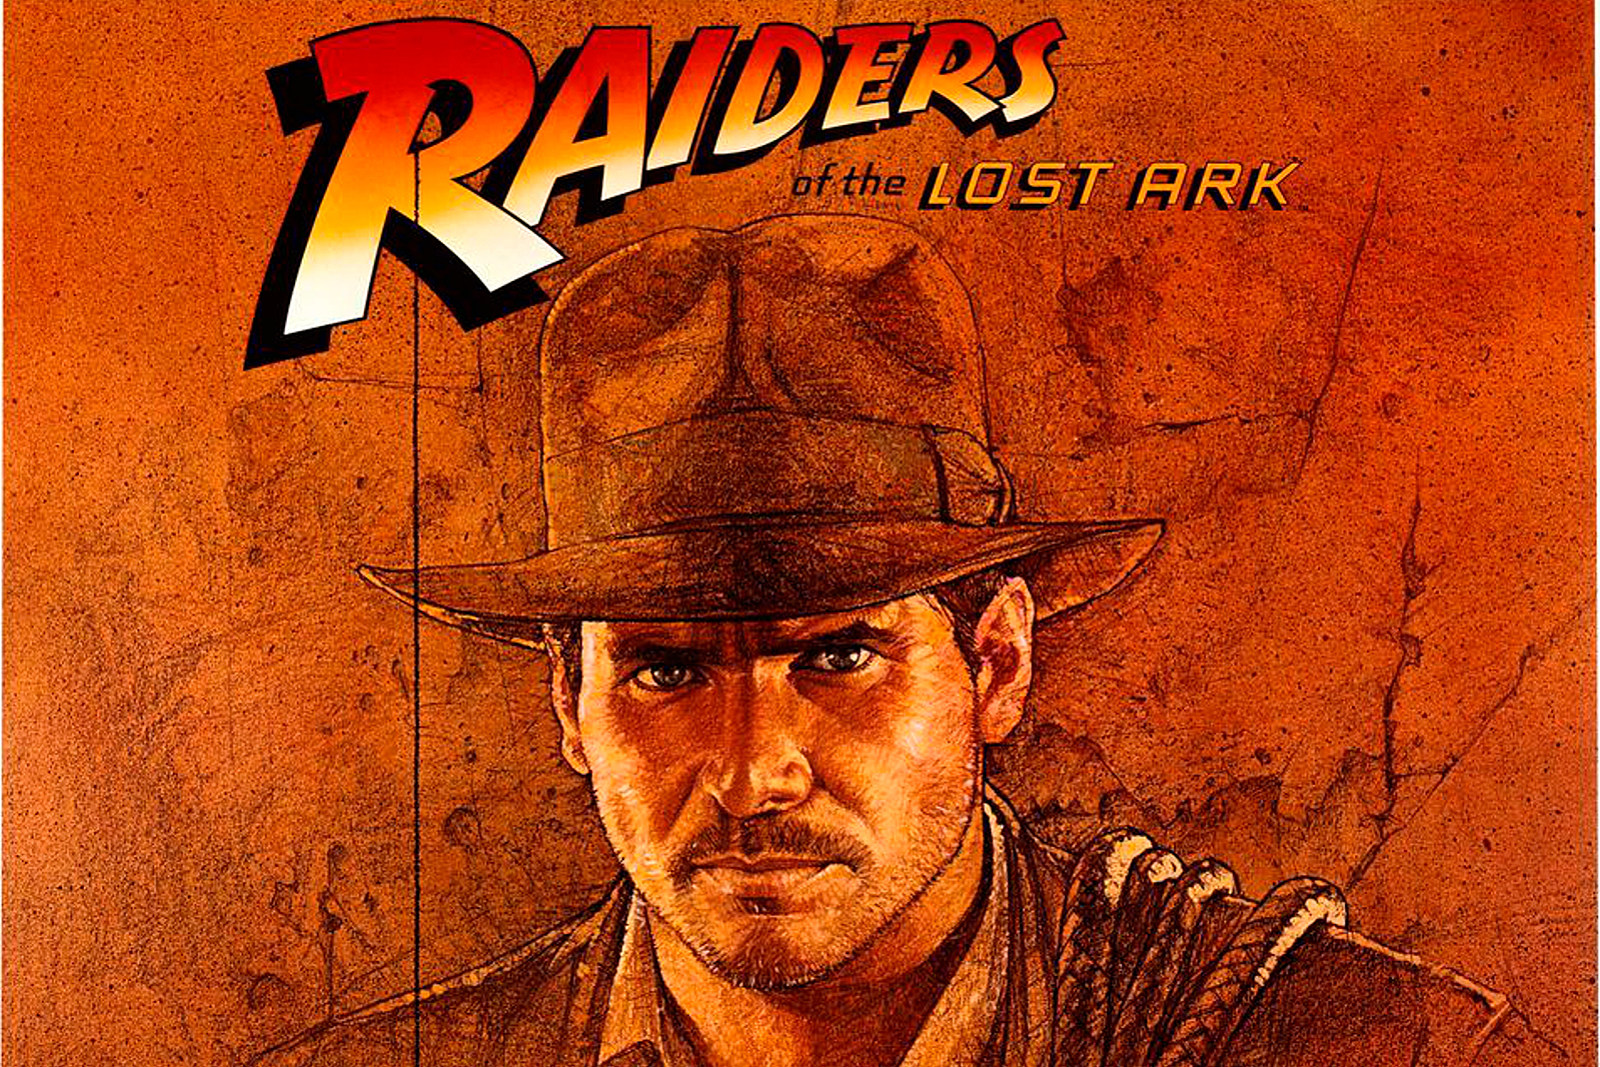 Raiders of the Lost Ark - Wikipedia